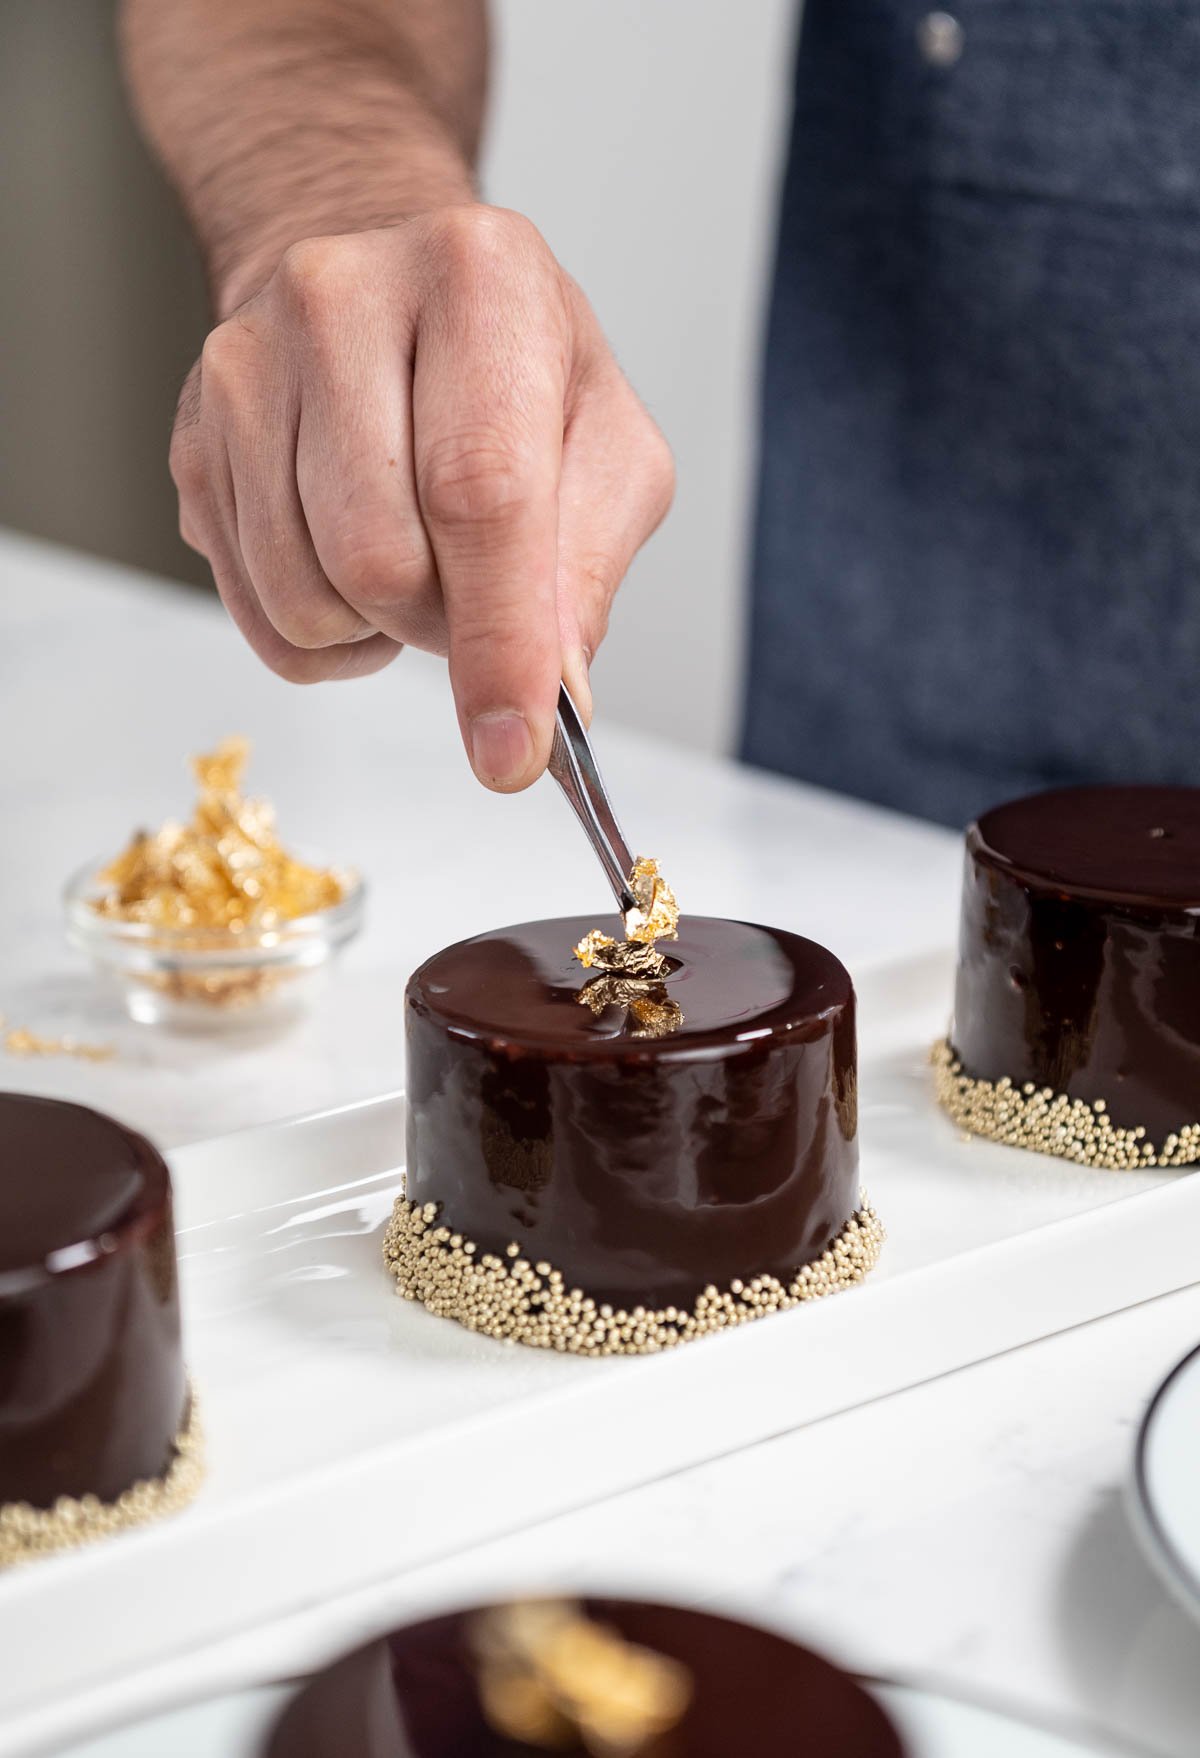 hand placing edible gold on top of chocolate entremet using tweezers